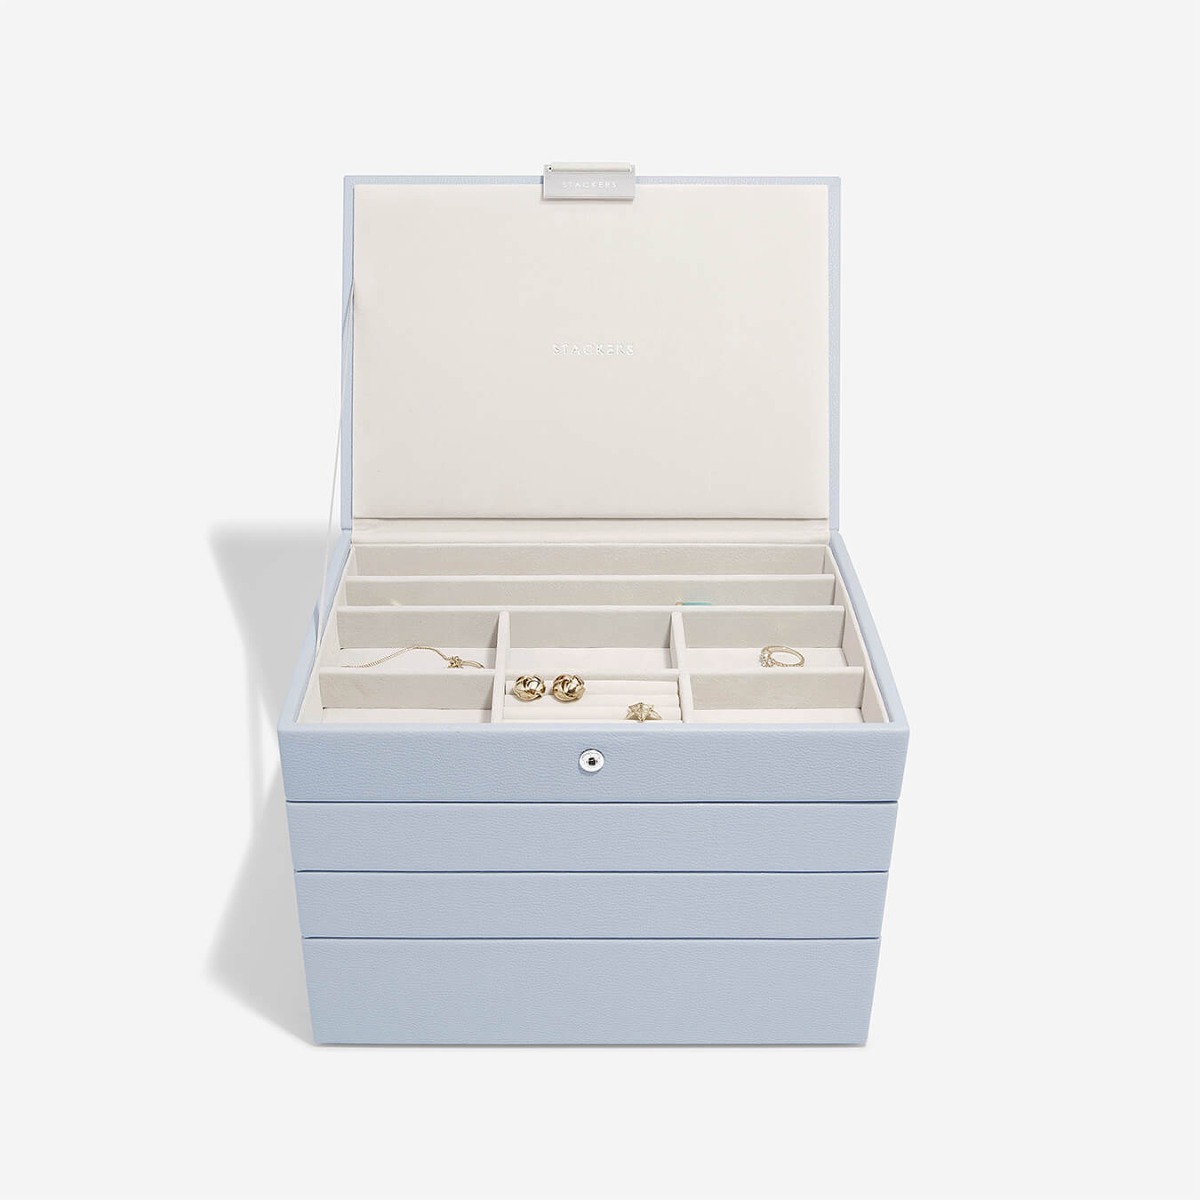 Stackers Luxury Classic Jewellery Box, White